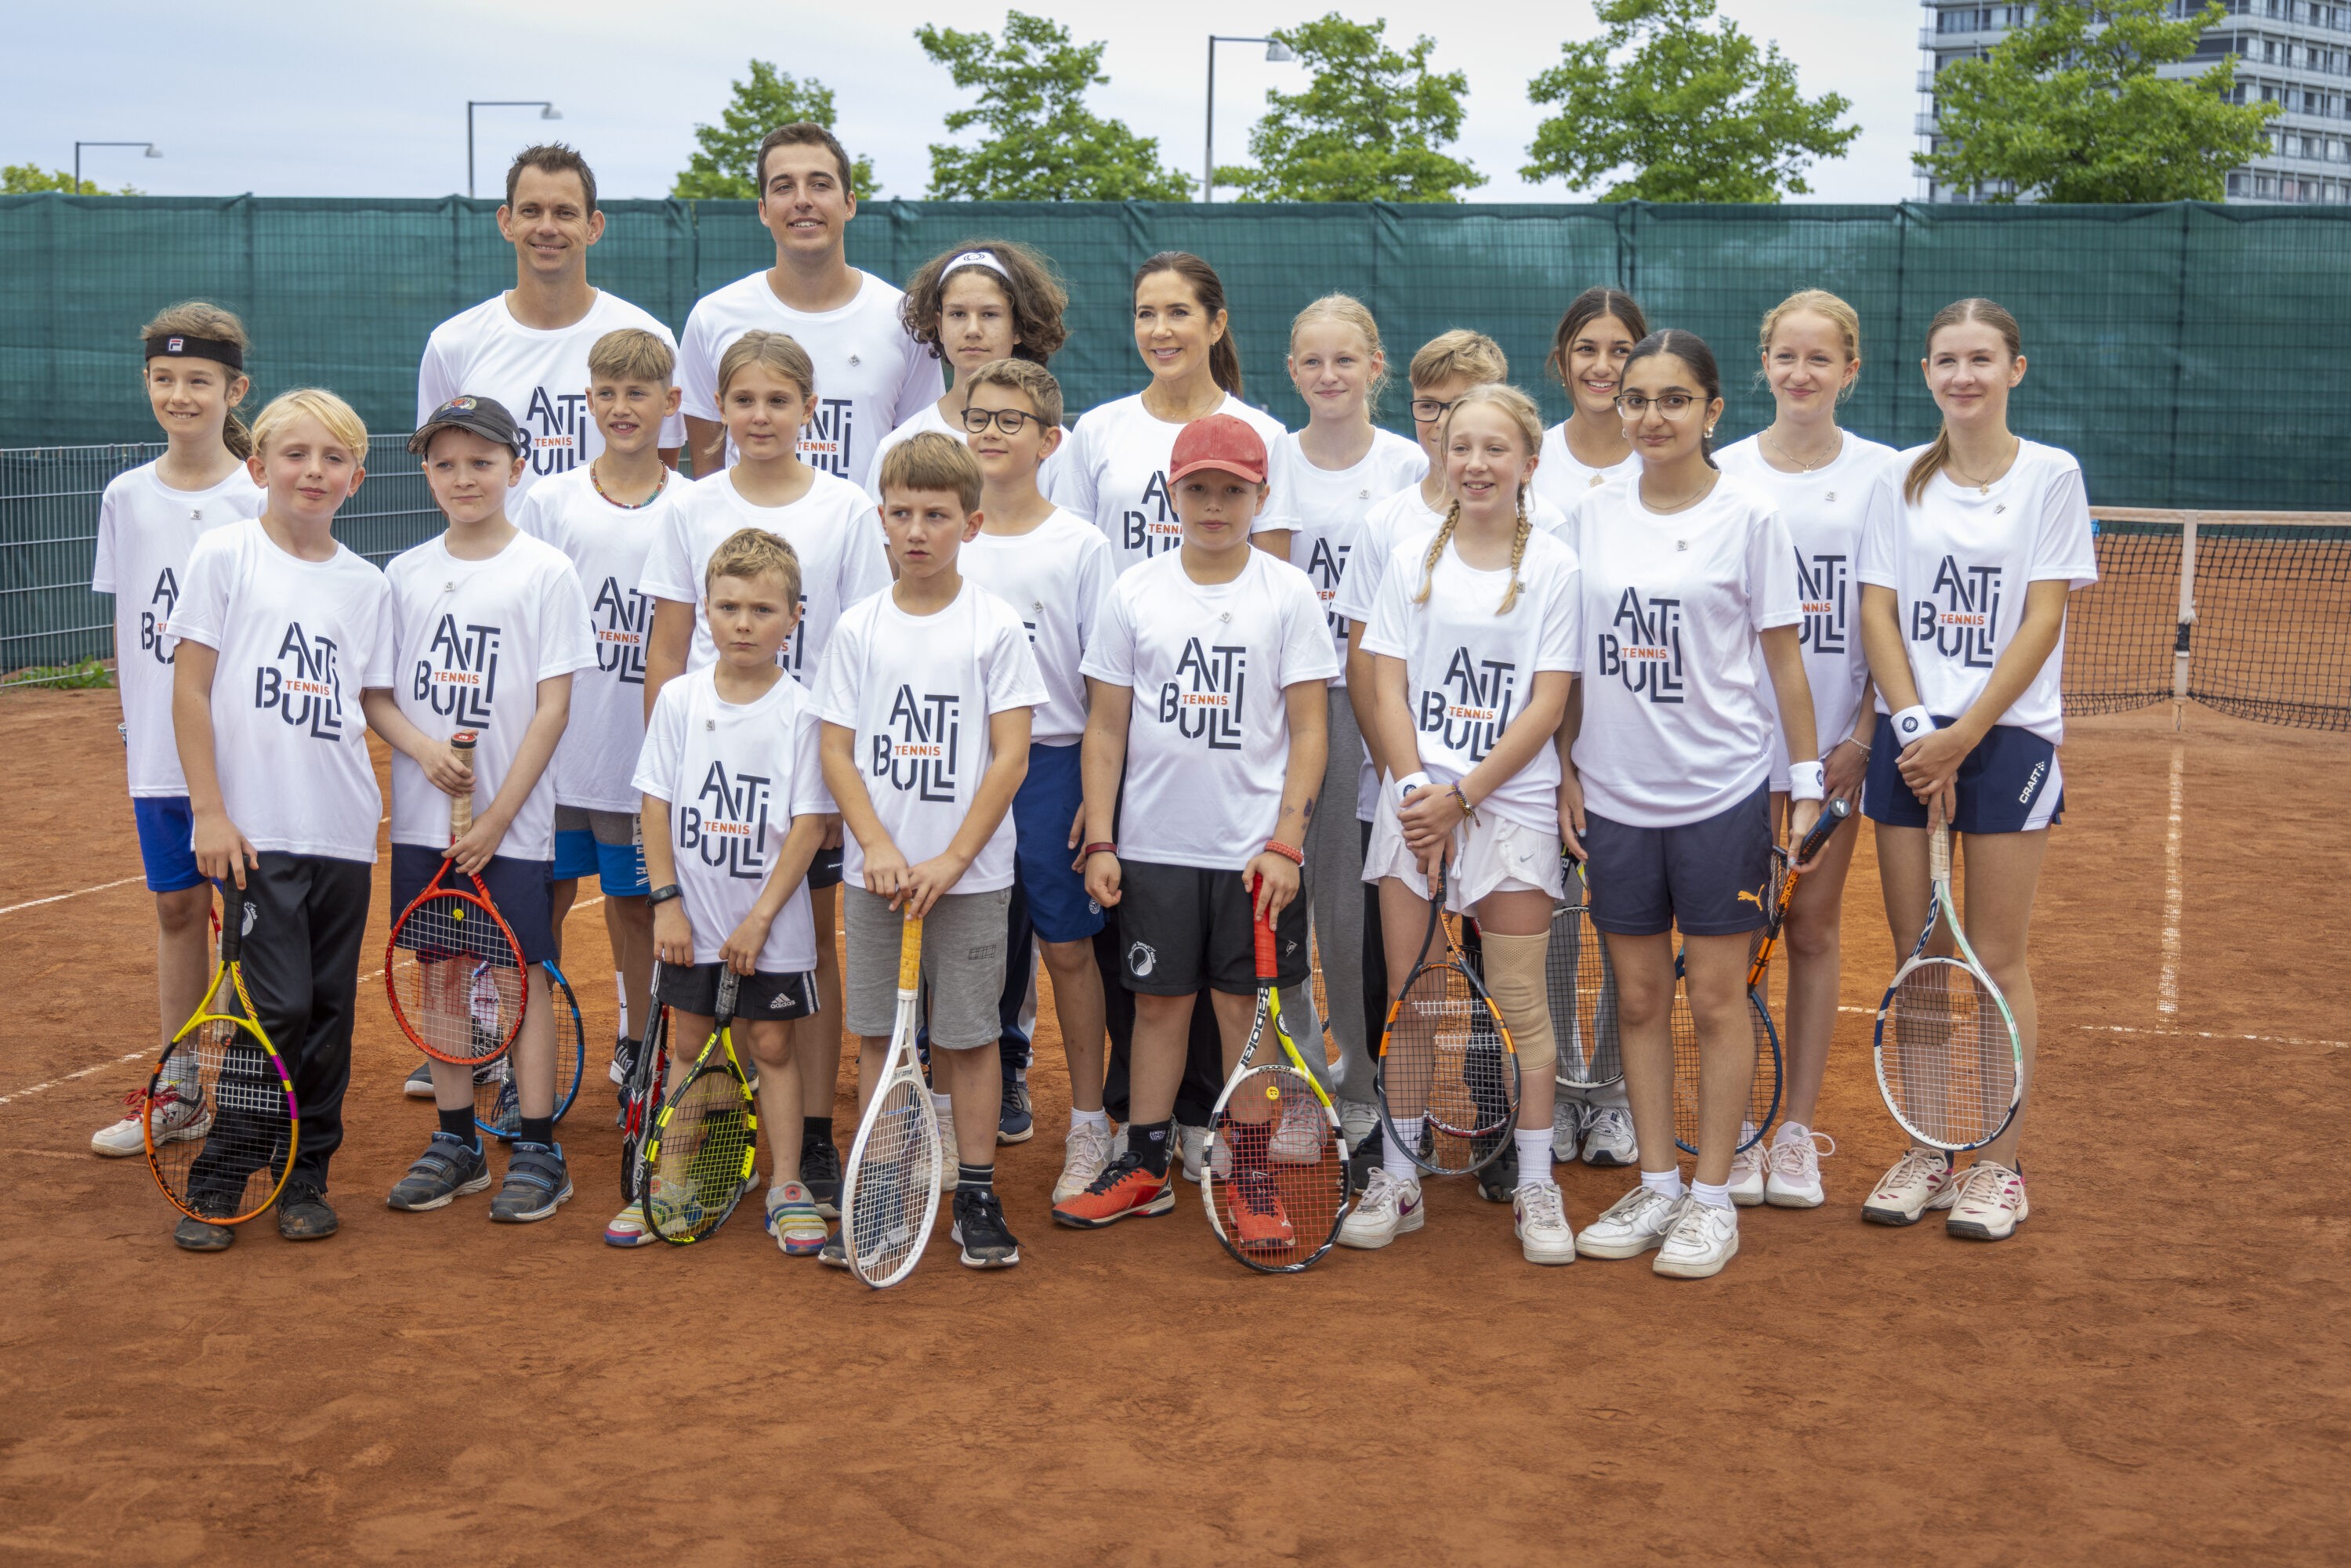 Antibulli Tennis - Gladsaxe Tennisklub.